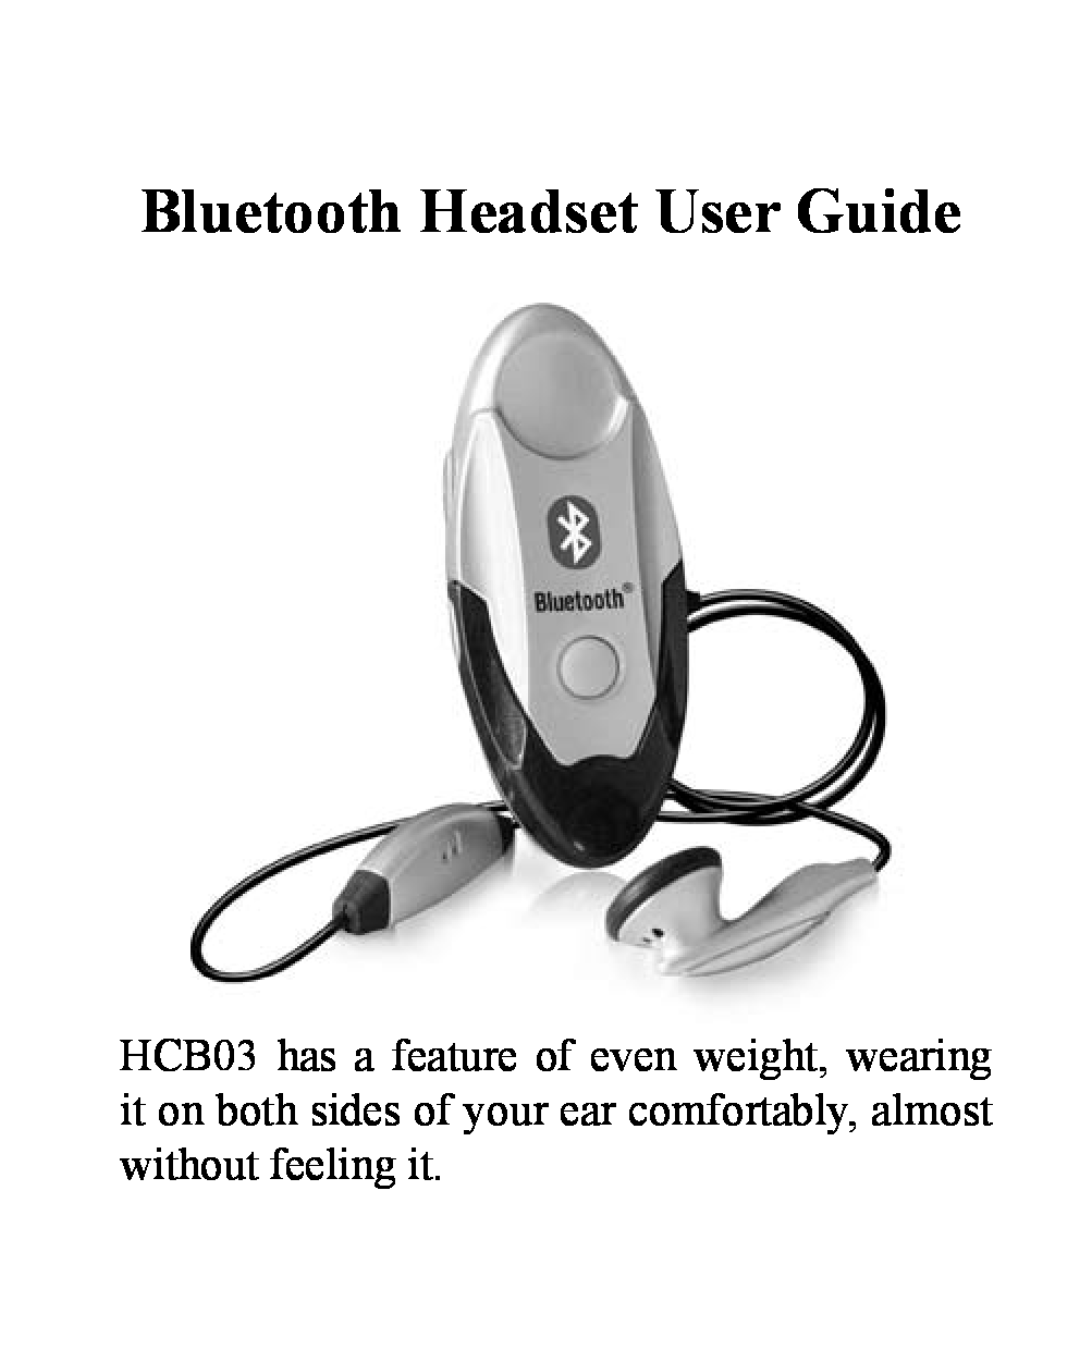 Huey Chiao HCB03 manual Bluetooth Headset User Guide 